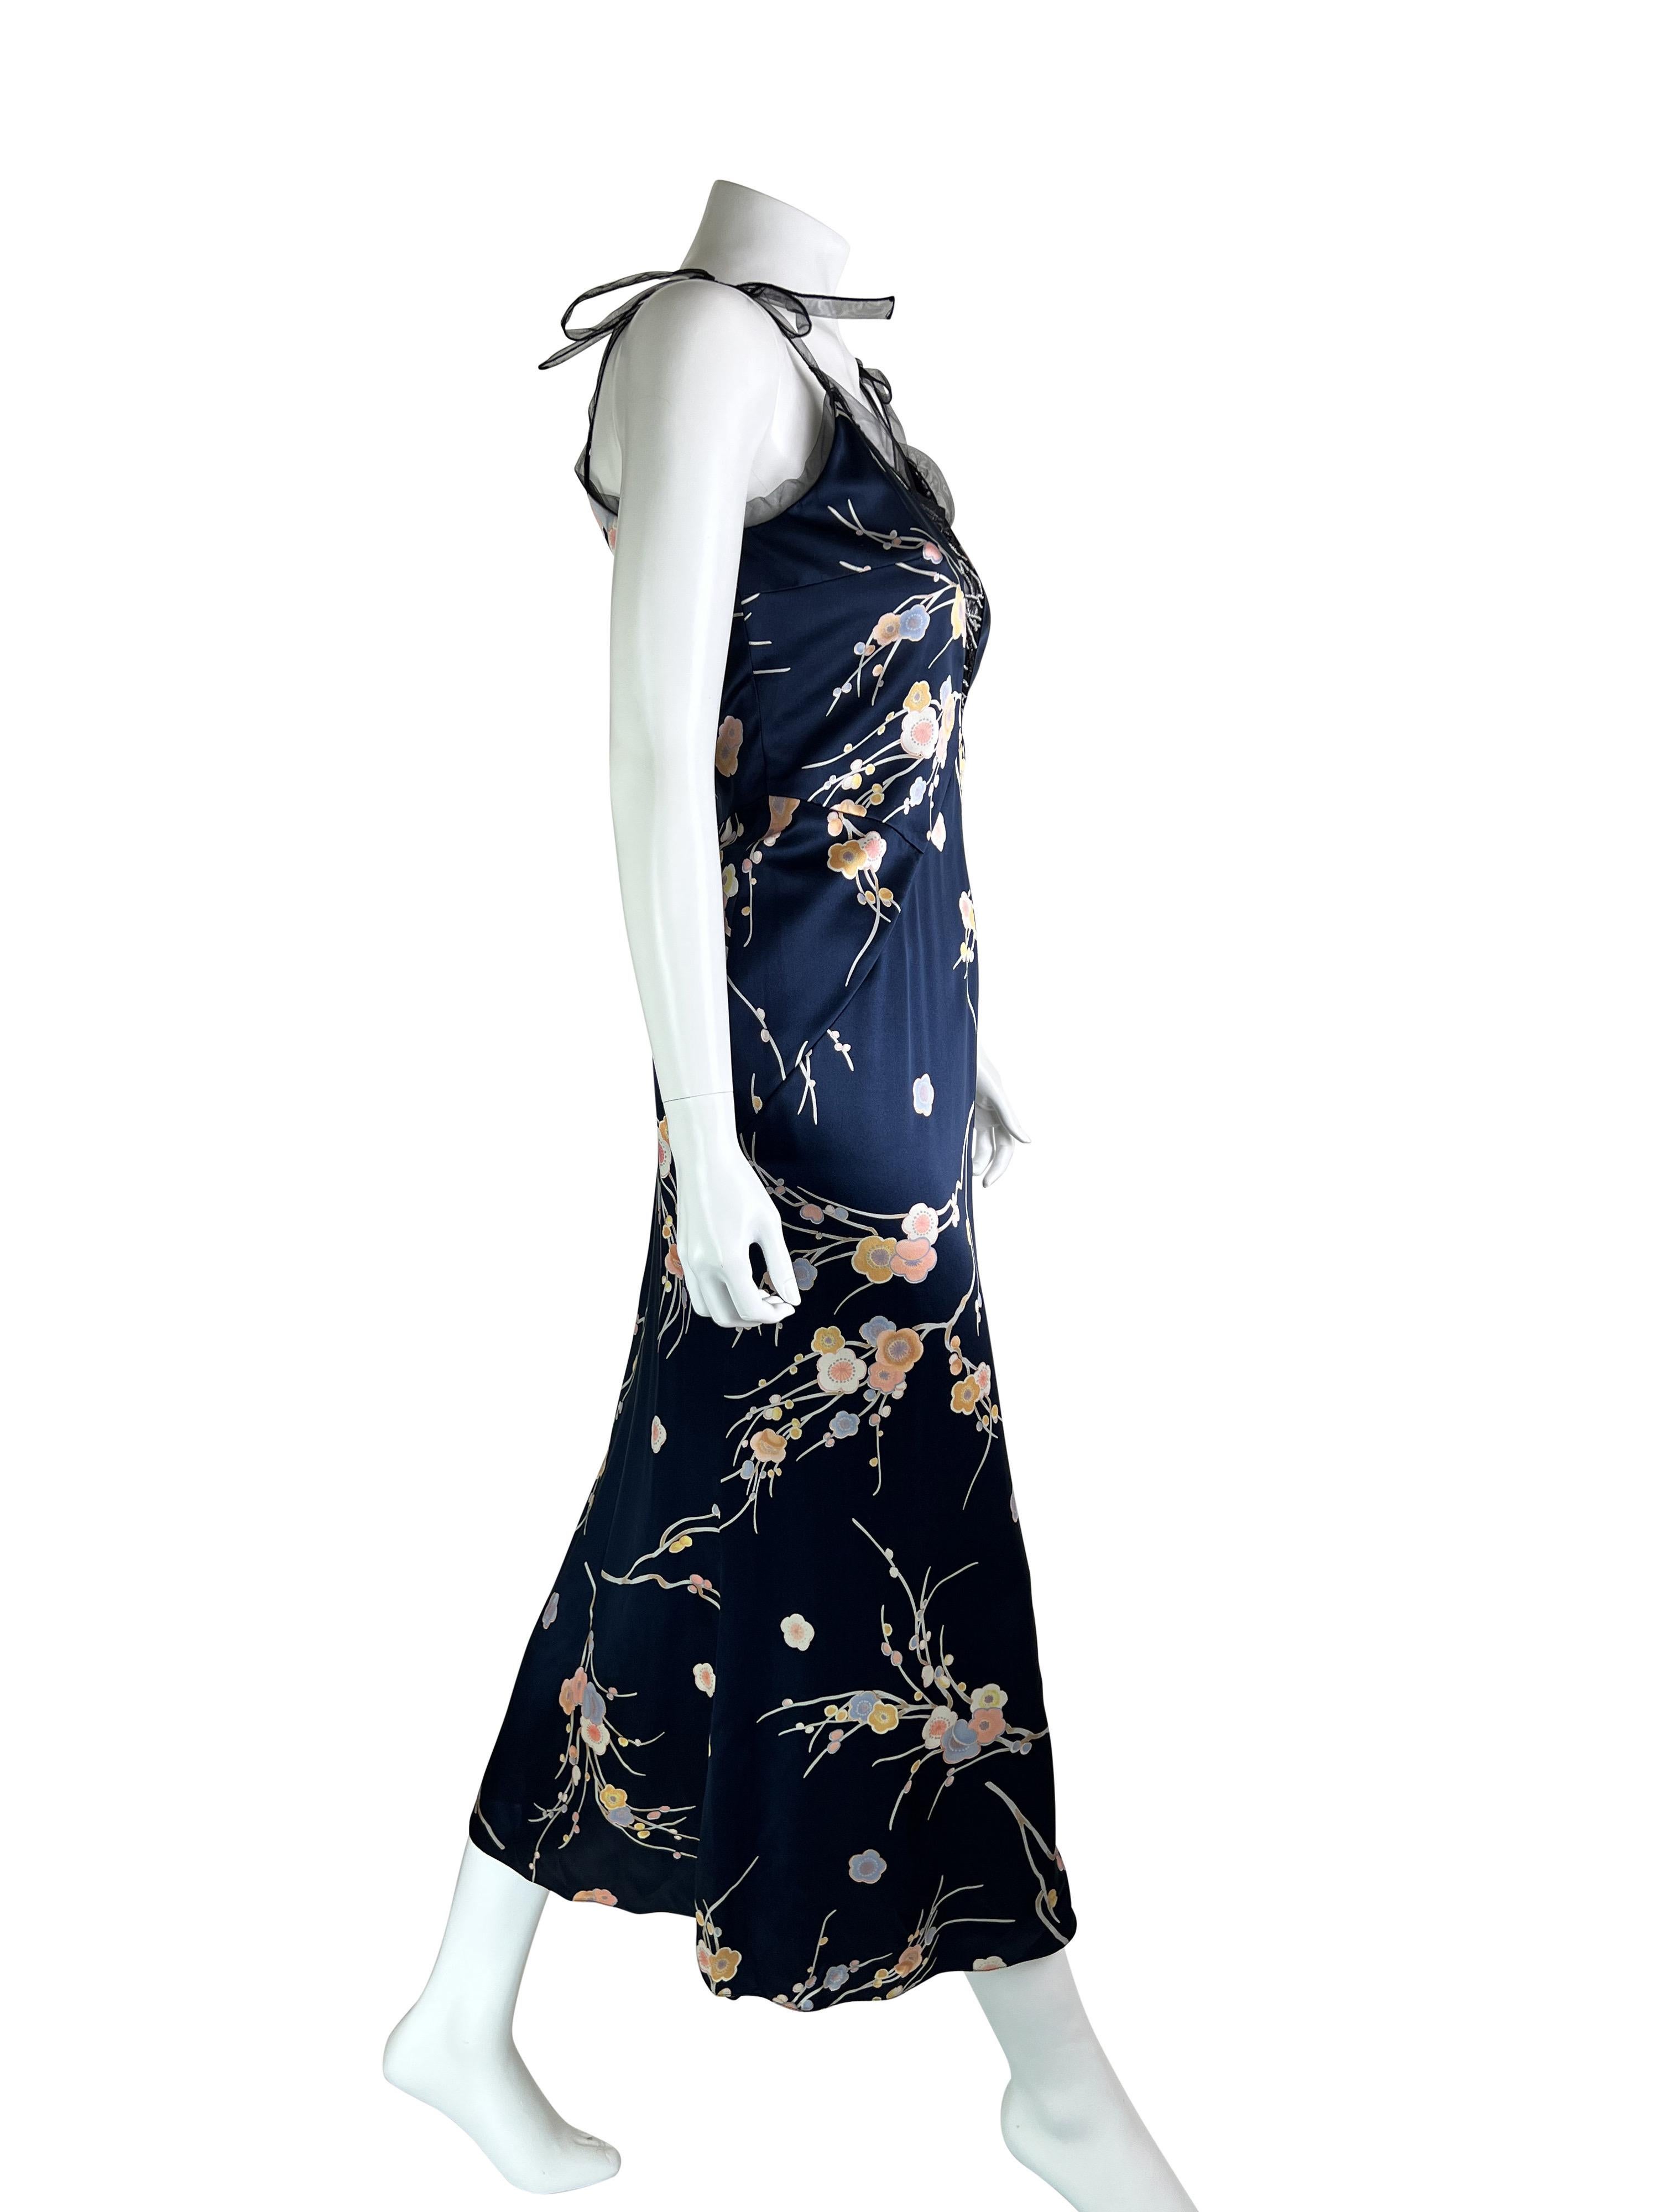 Fall 2004 Giorgio Armani Cherry Blossom Print Silk Dress 1